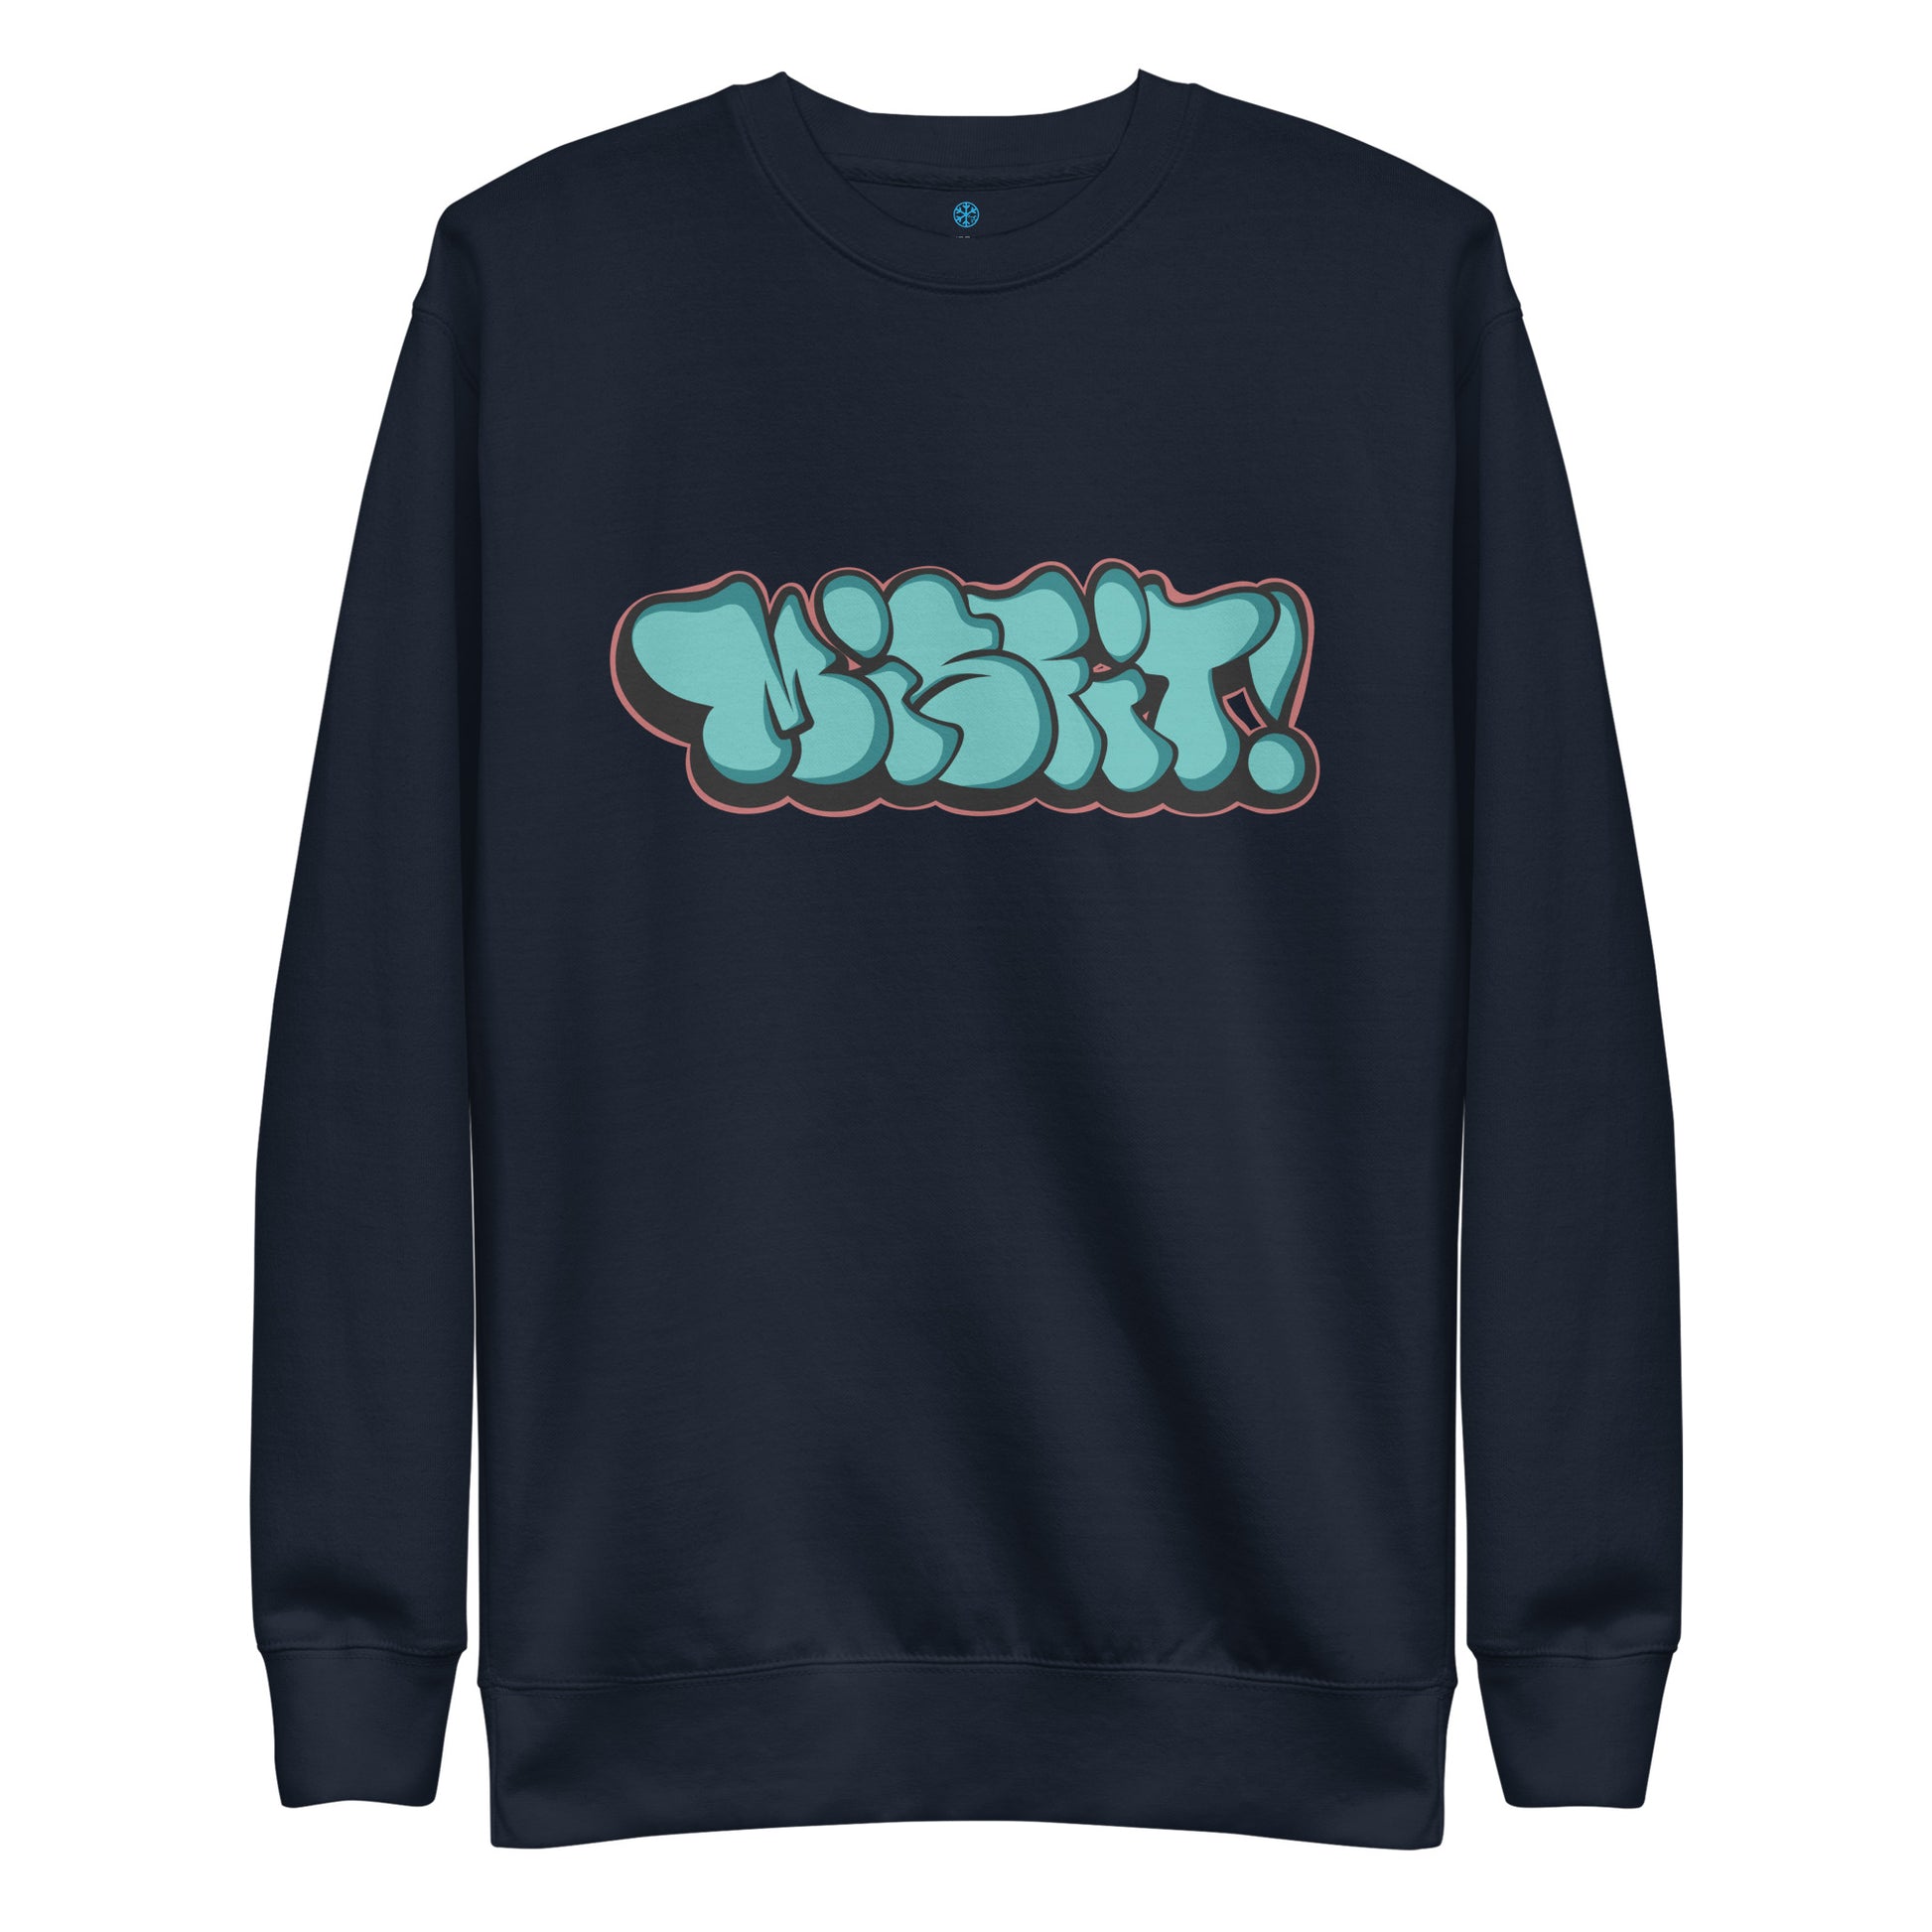 Misfit sweatshirt by B.Different Clothing street art graffiti inspired streetwear brand